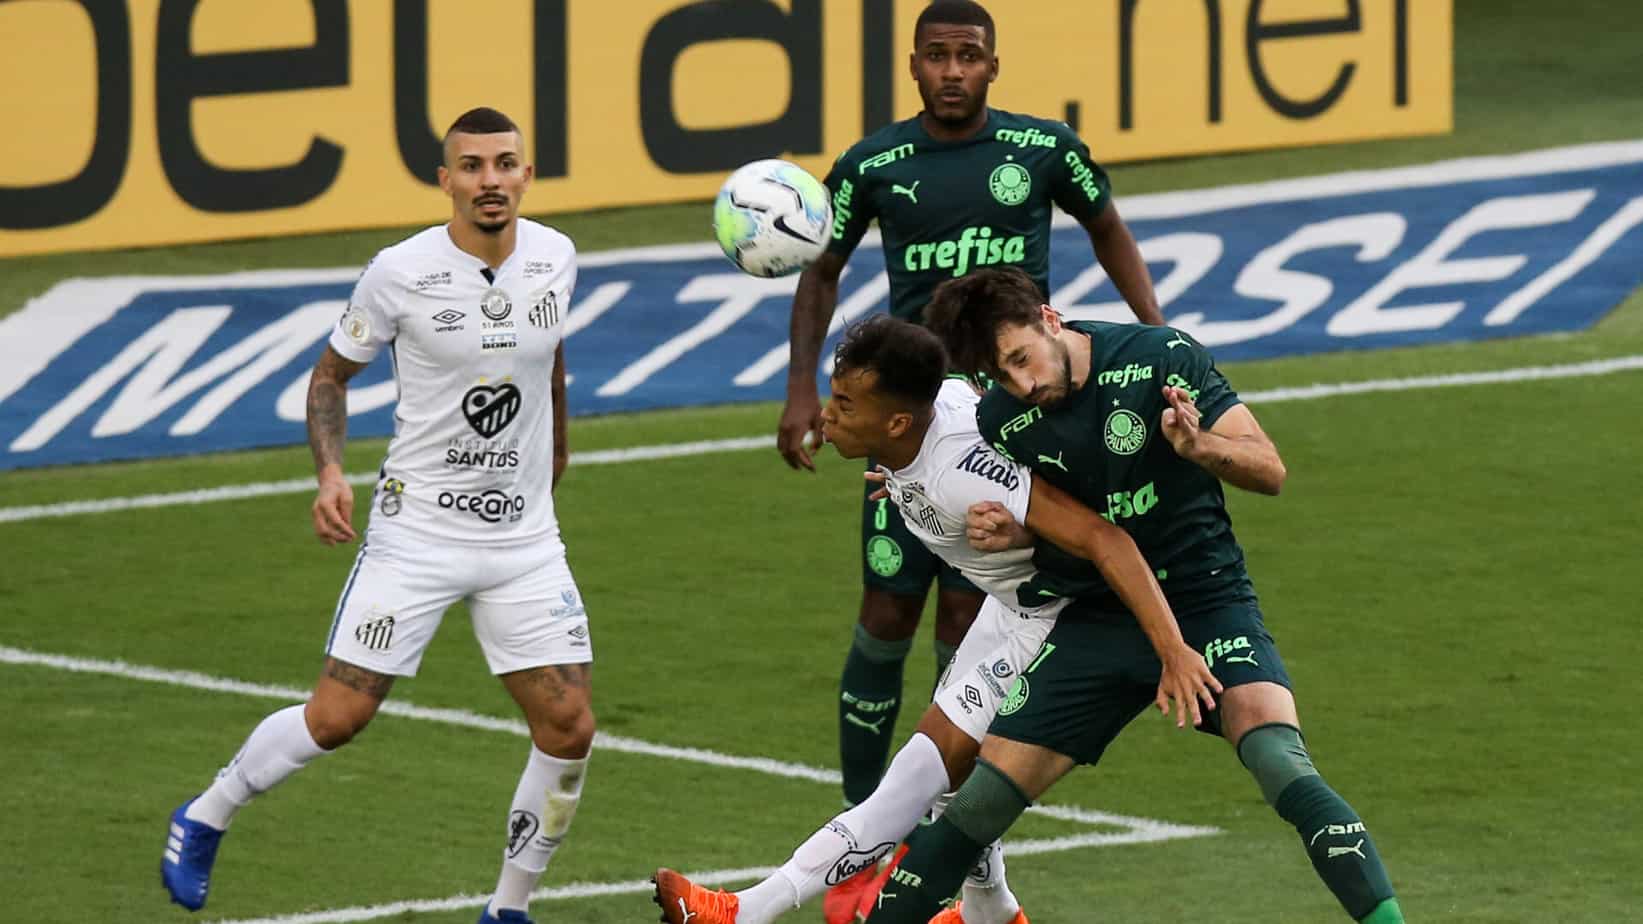 Palmeiras vs. Santos – Betting Odds and Free Picks